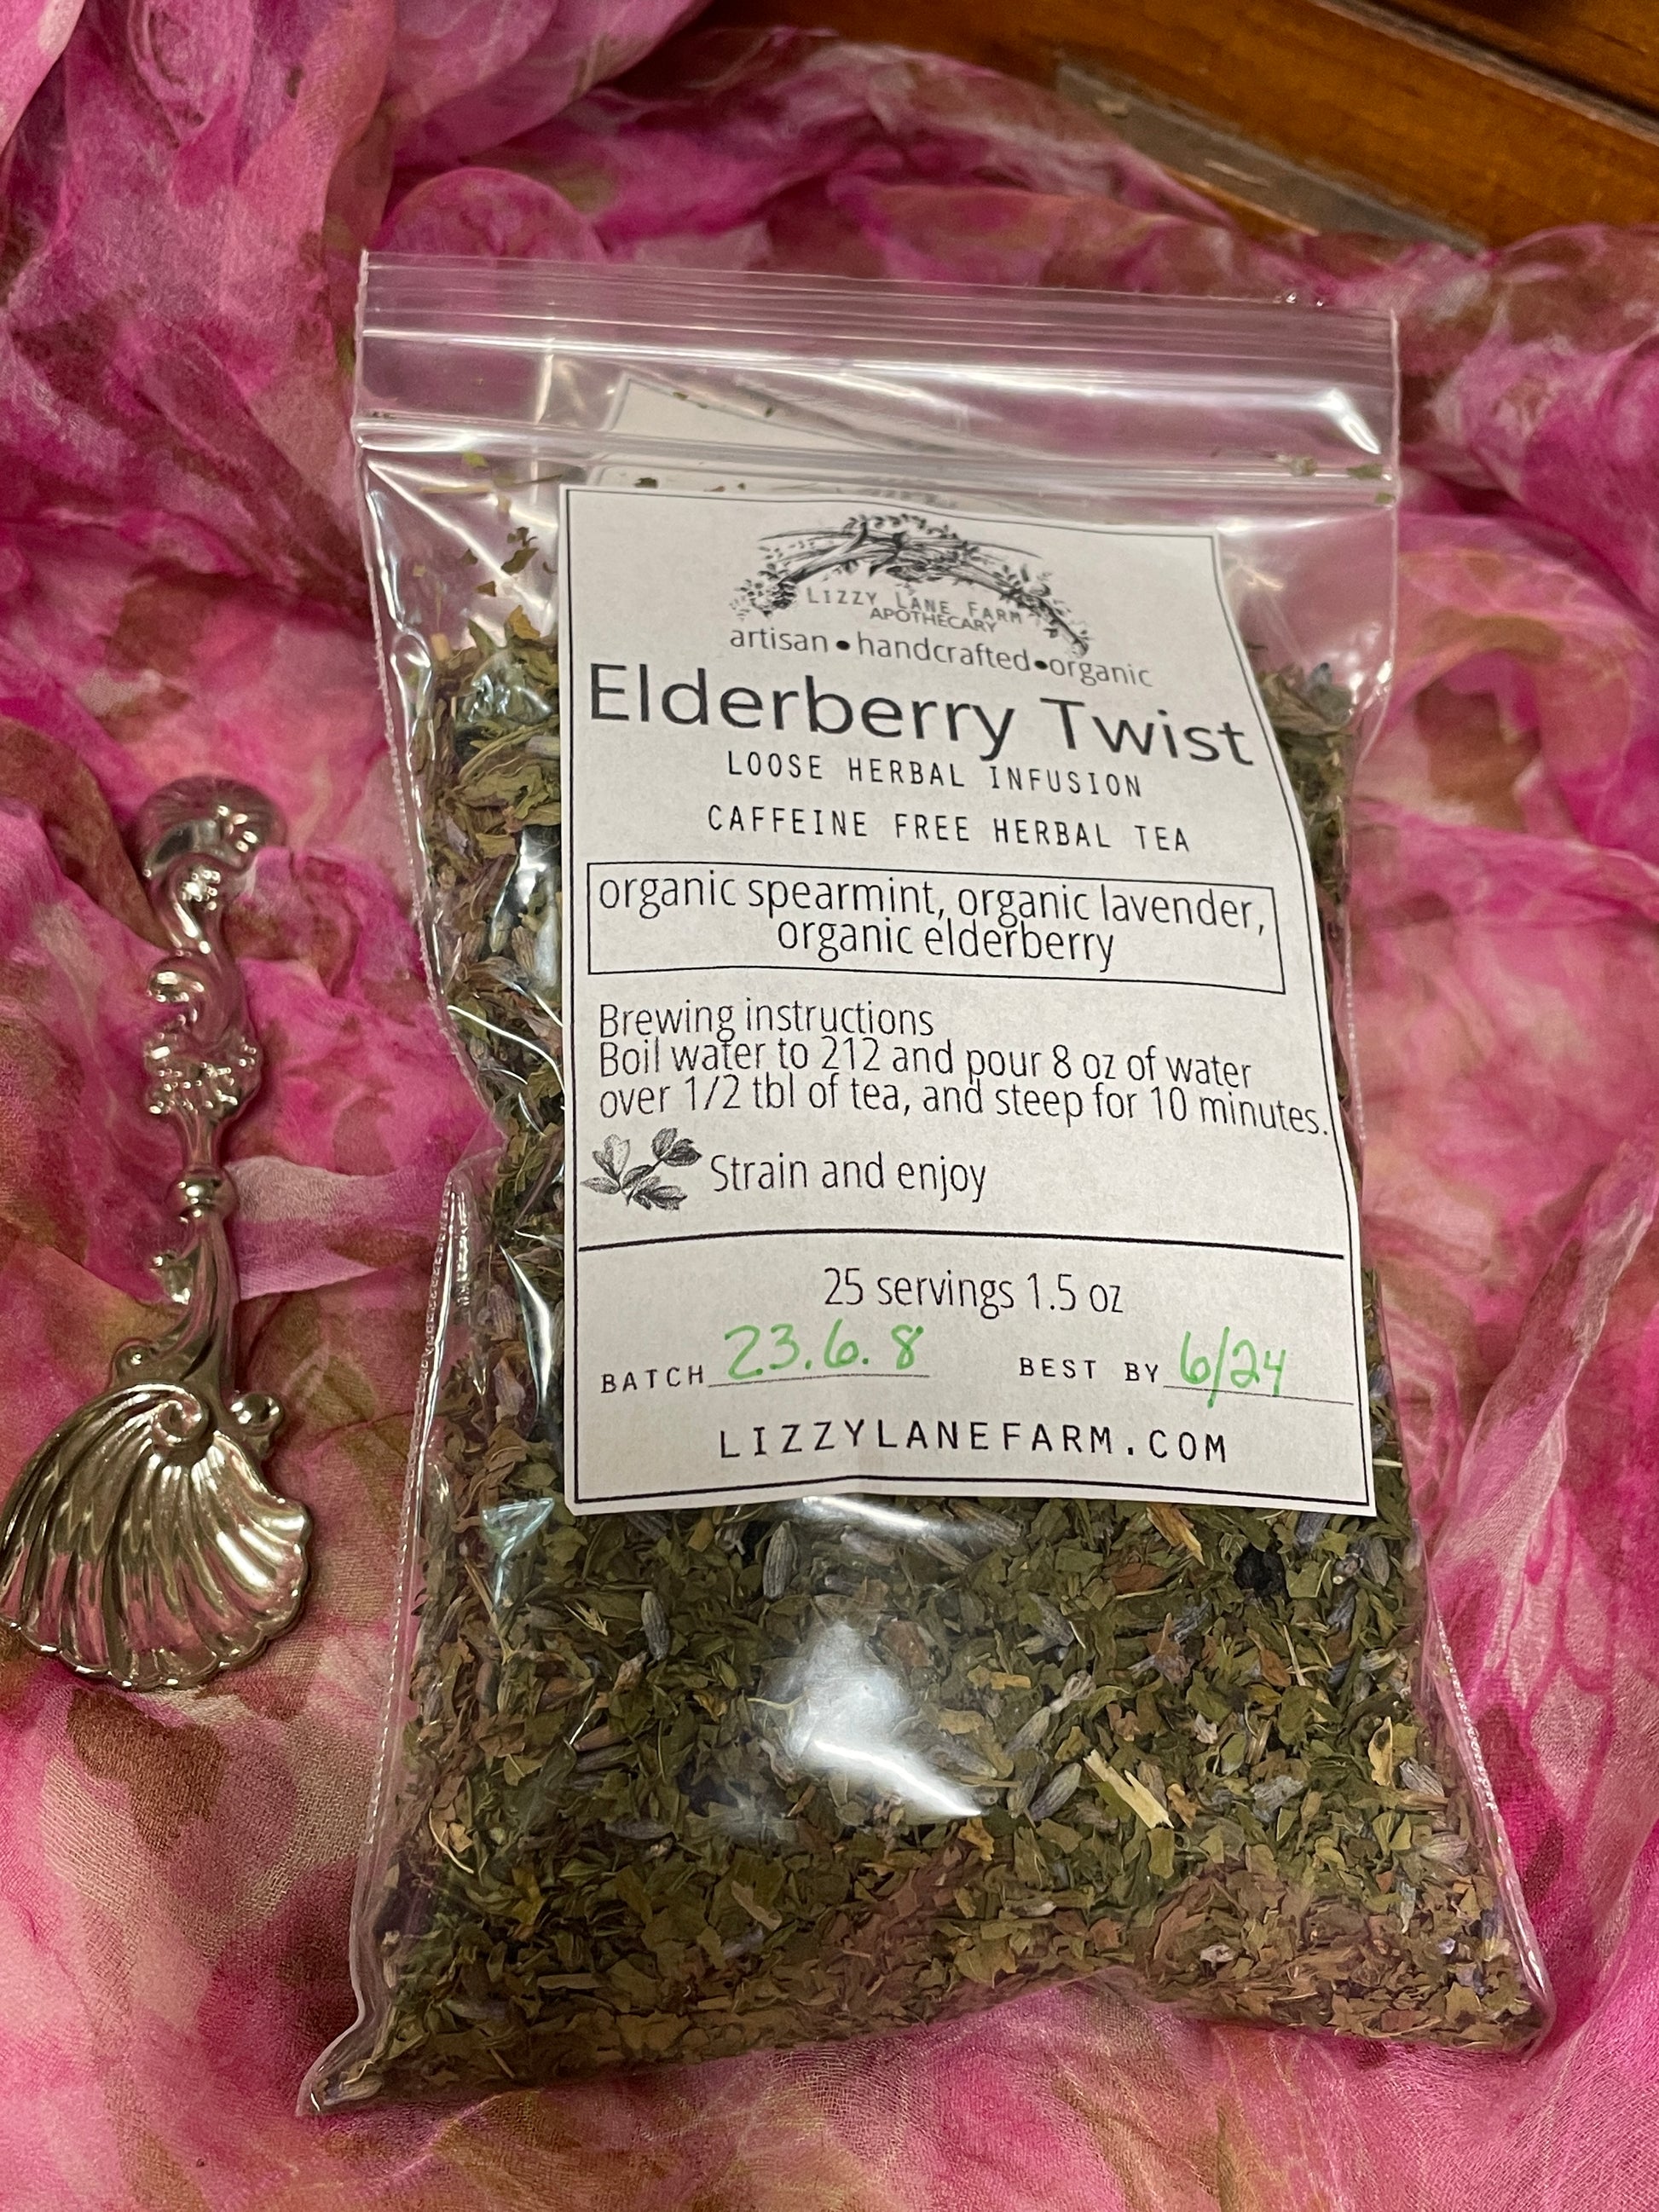 Elderberry Twist Blend | Elderberry & Spearmint herbal infusion | Organic Artisan Handcrafted Herbal Tea | Premium Quality Loose Leaf Tea